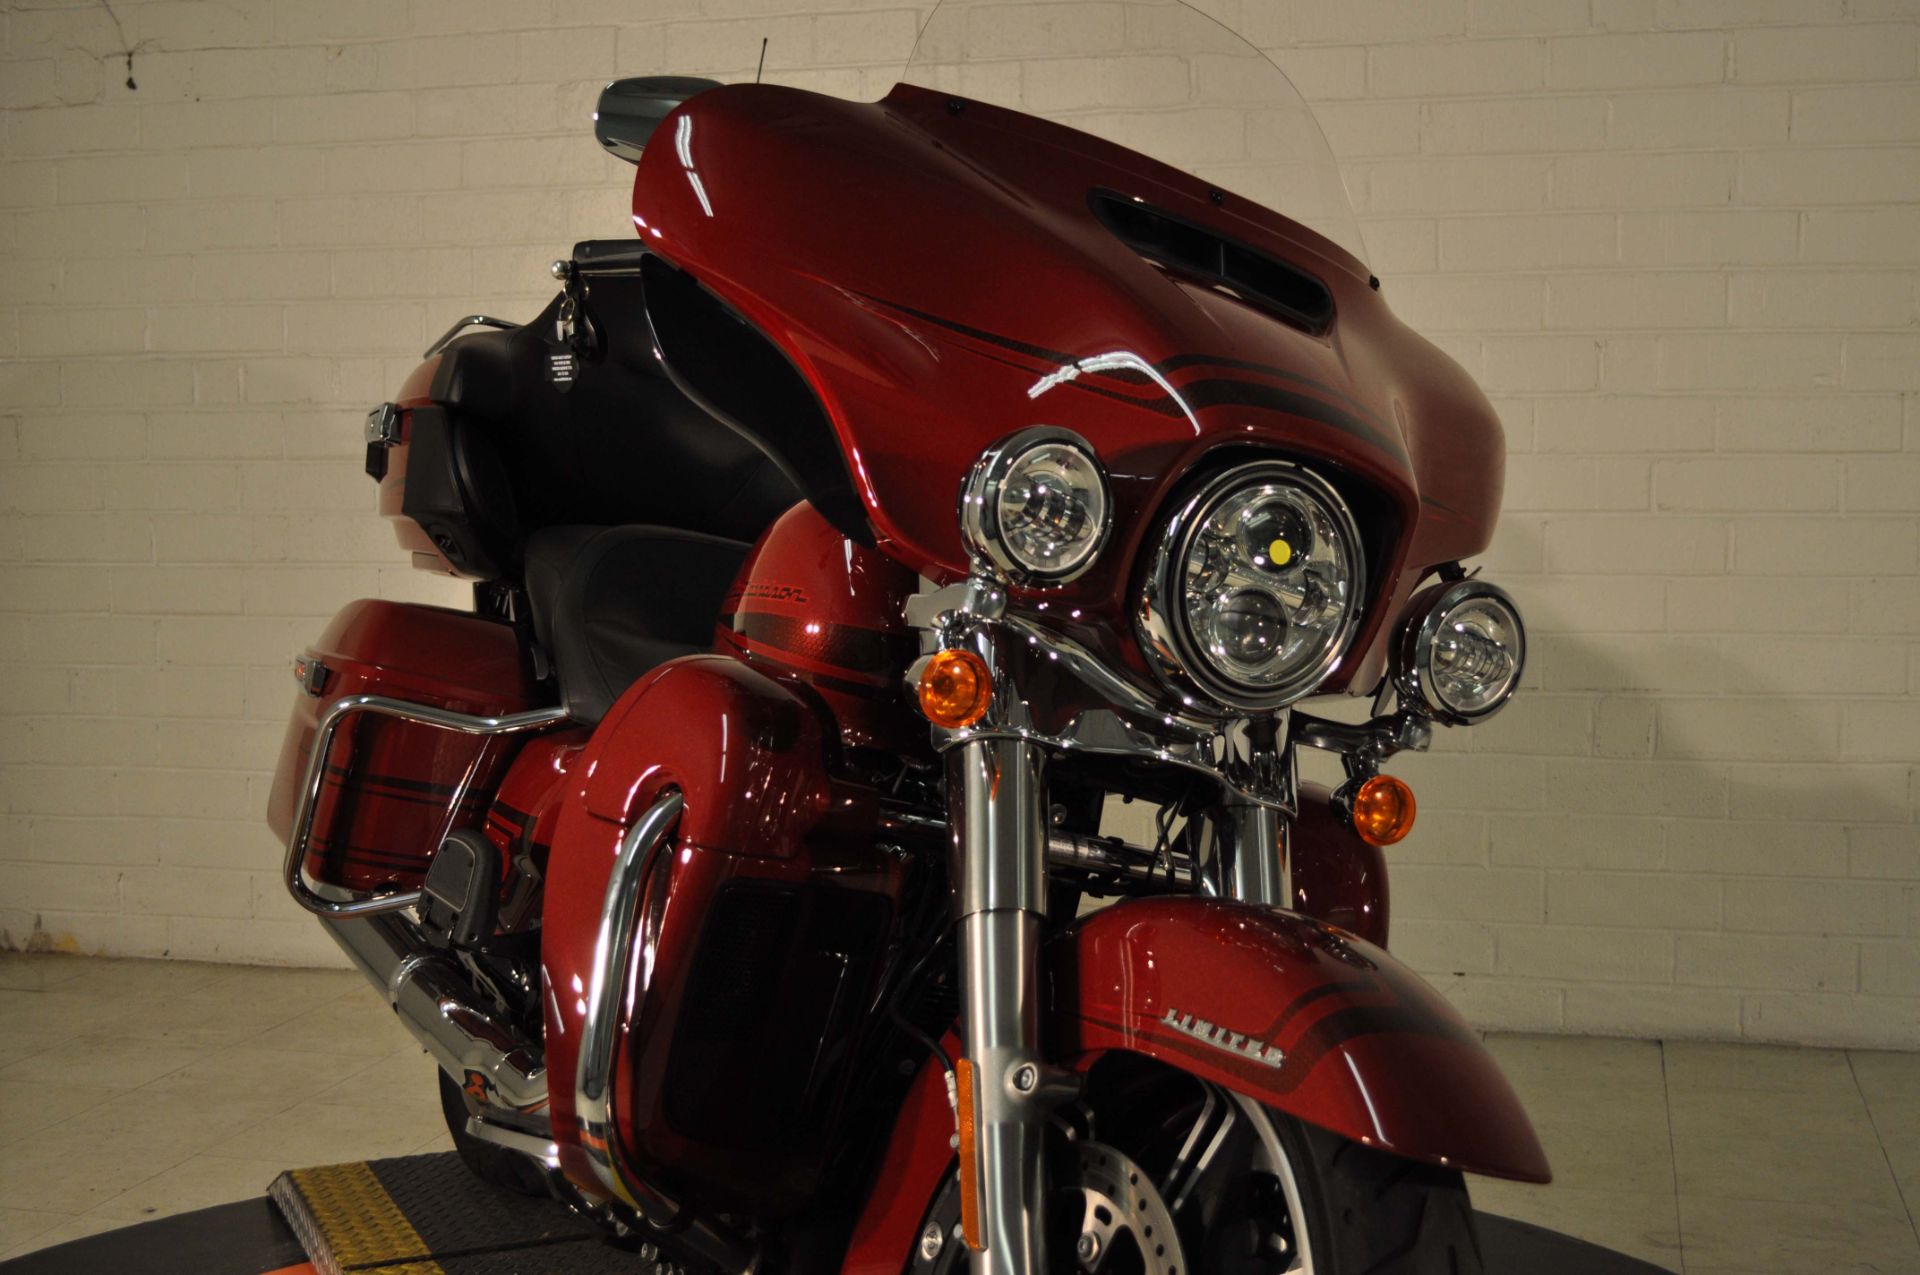 2020 Harley-Davidson Ultra Limited in Winston Salem, North Carolina - Photo 10